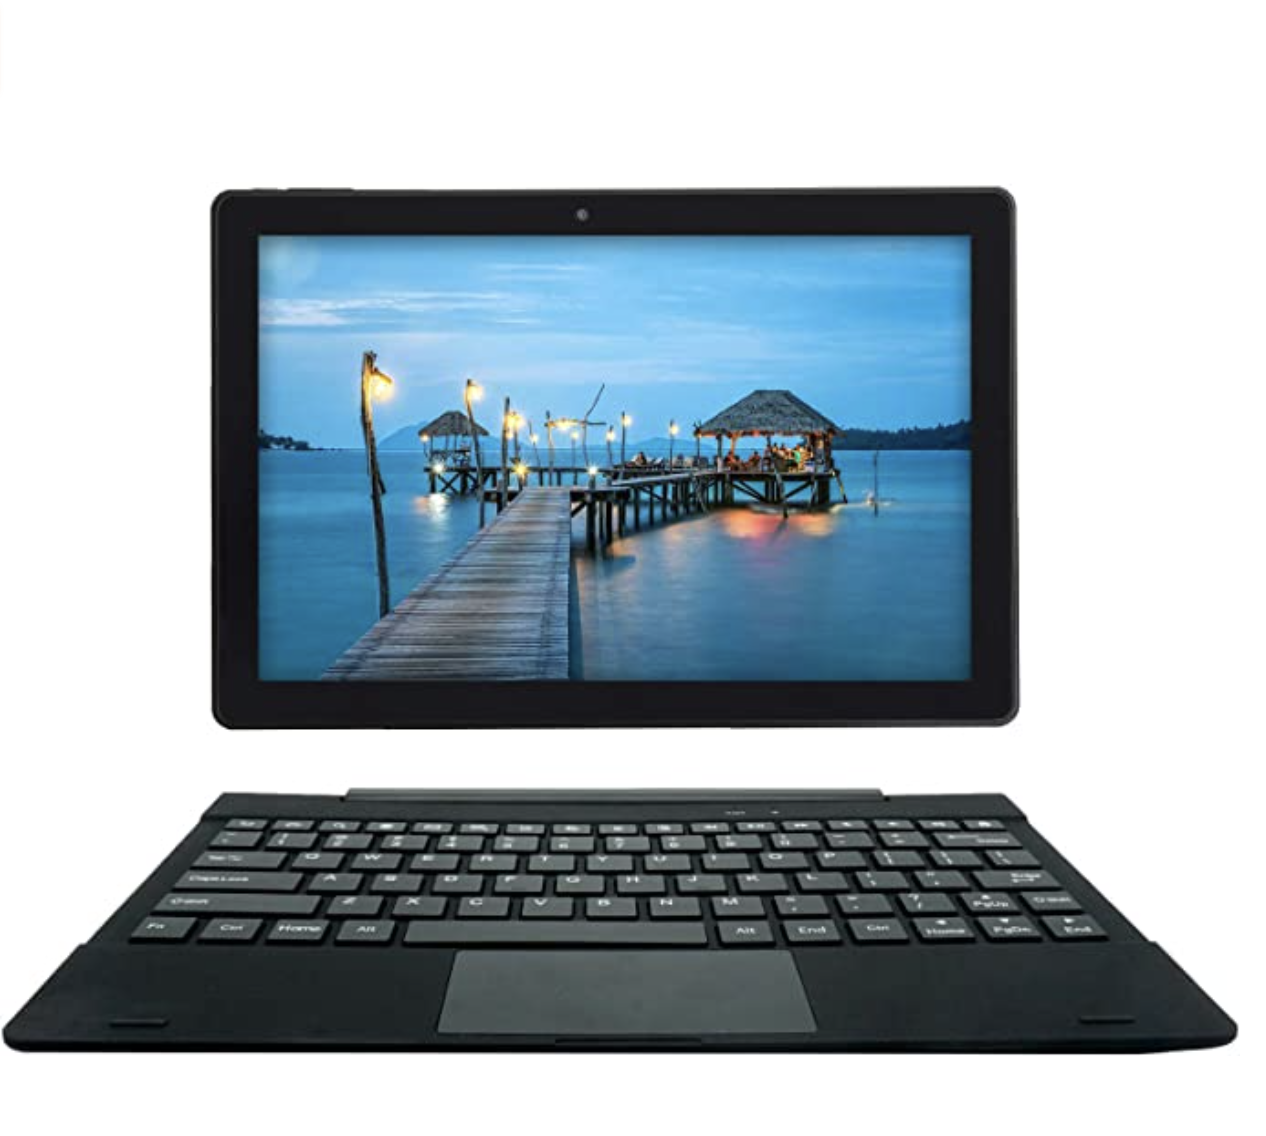 Simbans TL93 TangoTab Tablet Mini Laptop, 10-Inch